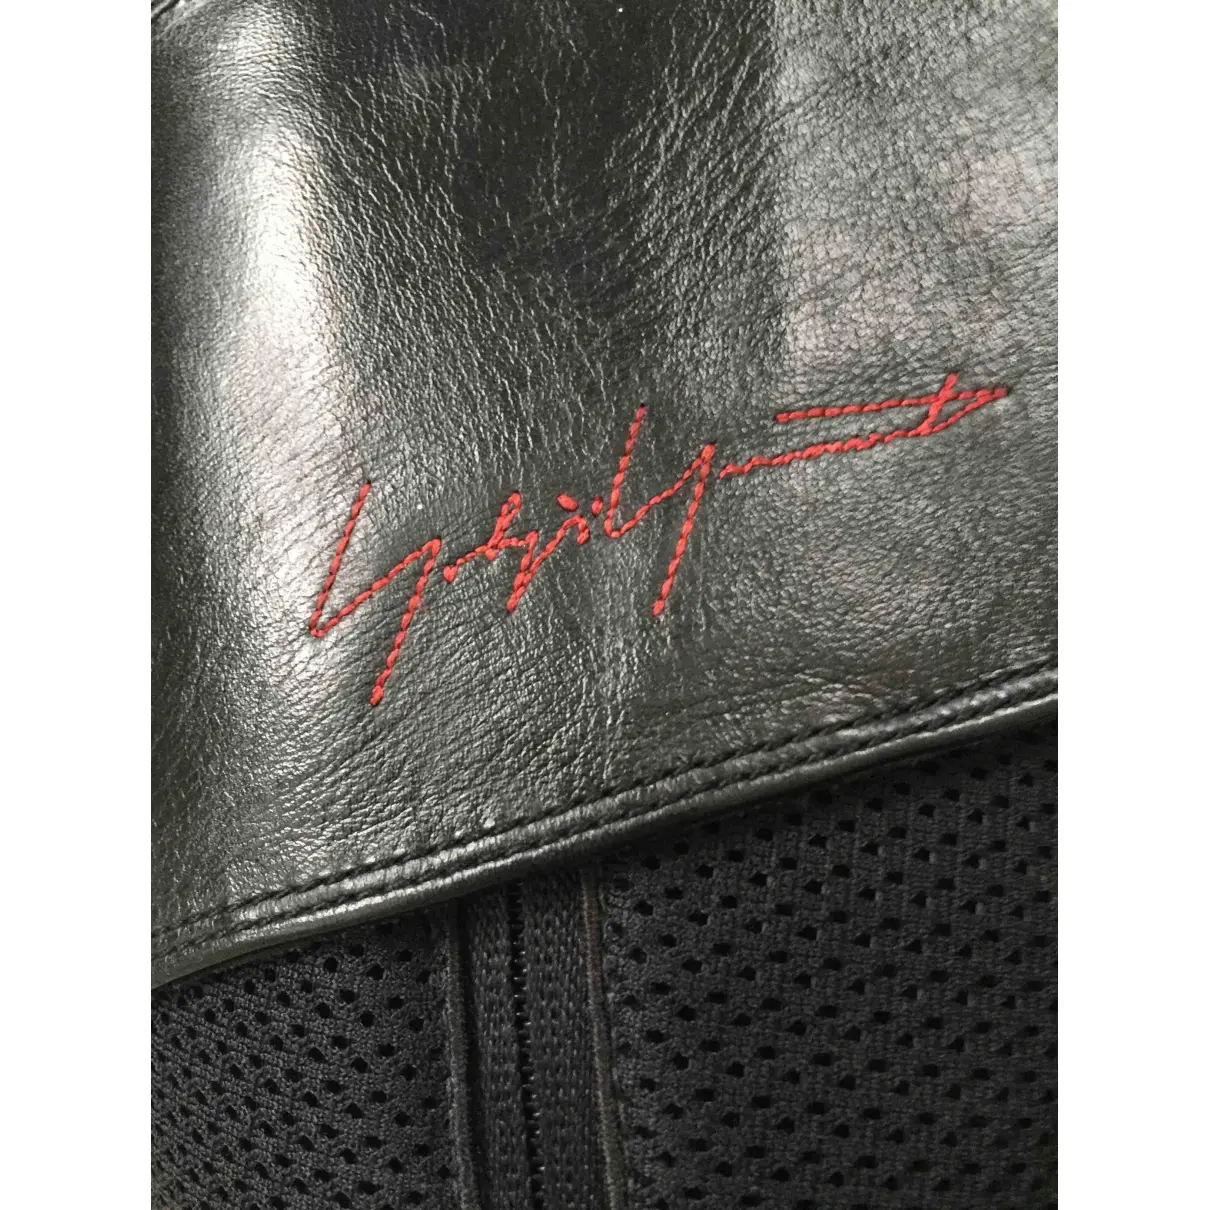 Buy Y-3 by Yohji Yamamoto Leather biker boots online